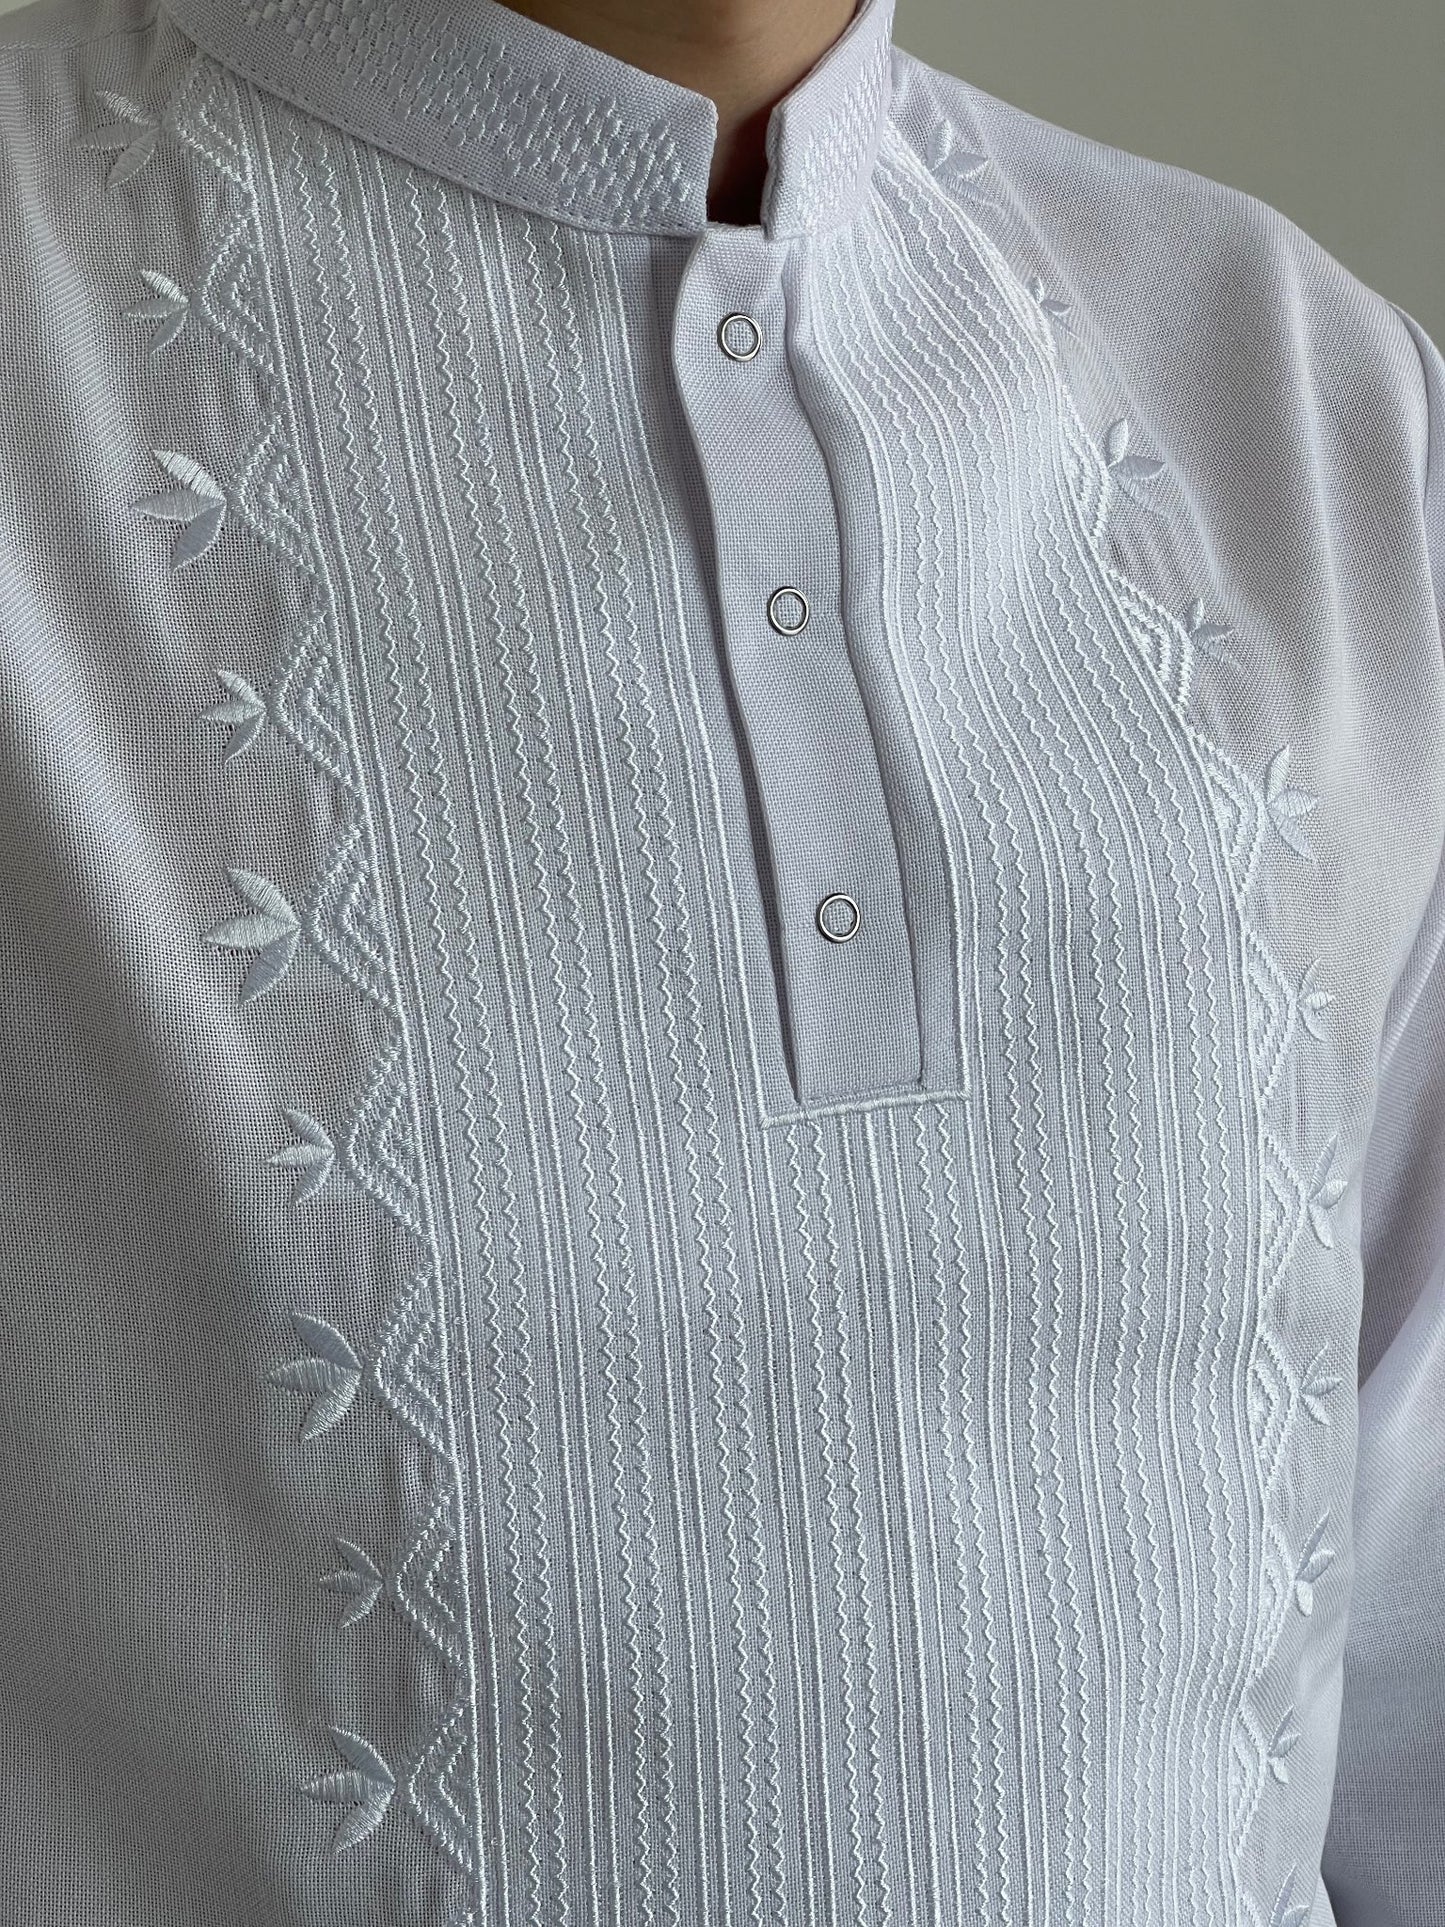 White Men's Vyshyvanka Shirt with White Embroidery